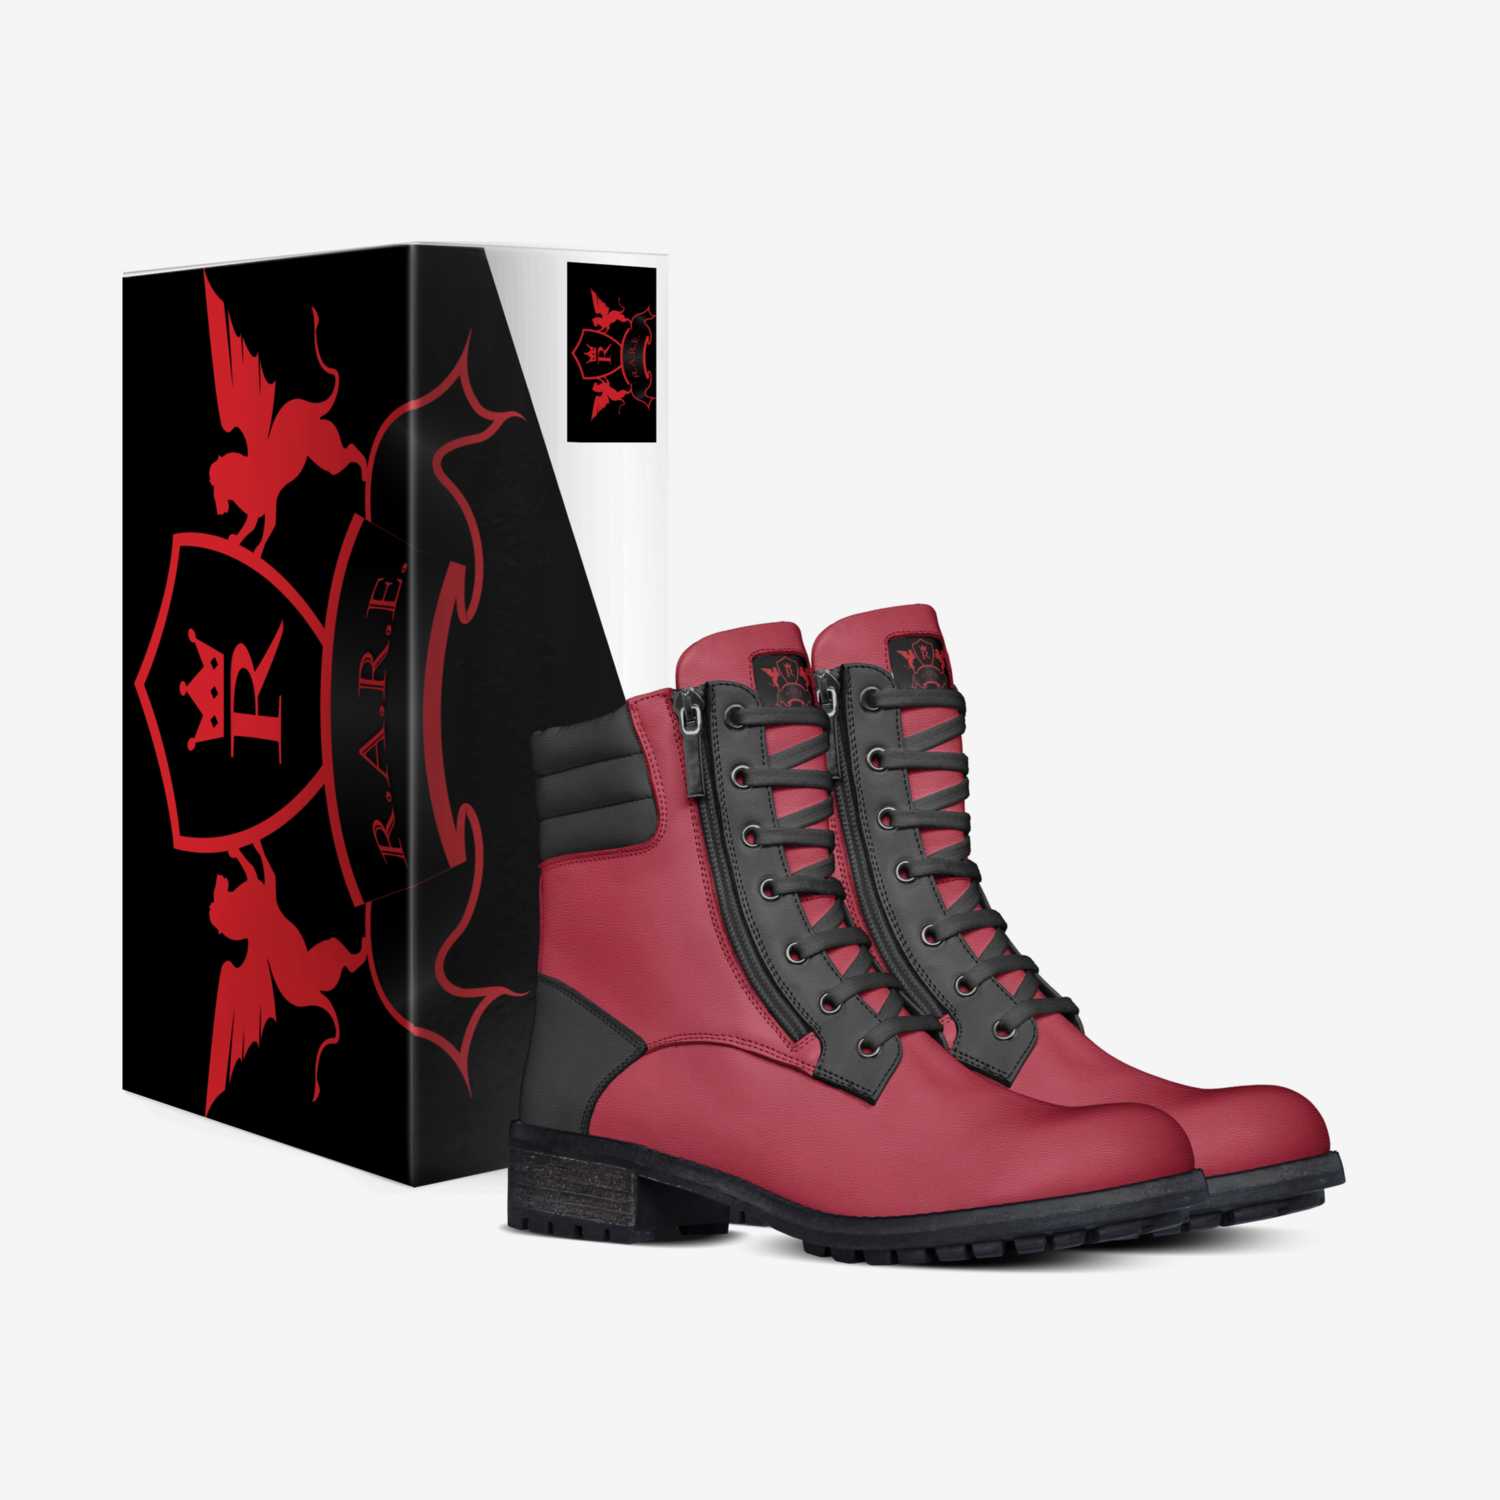 REDDWOMAN custom made in Italy shoes by John A. Annan | Box view